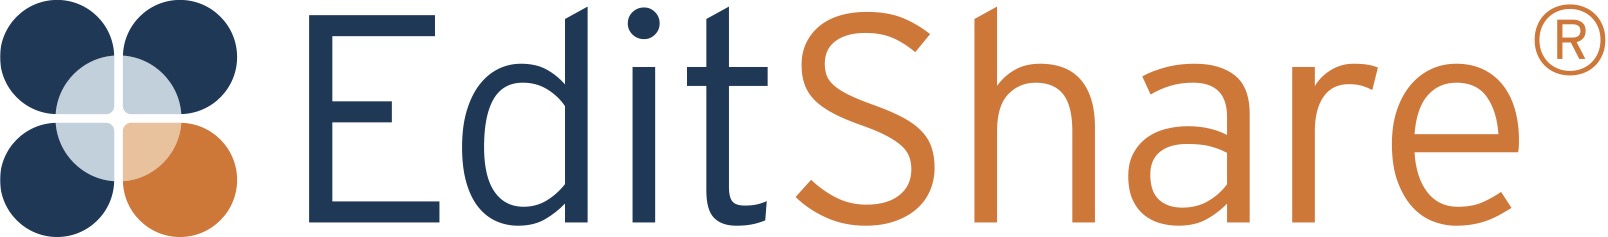 EditShare Primary Logo CMYK Orange and Navy